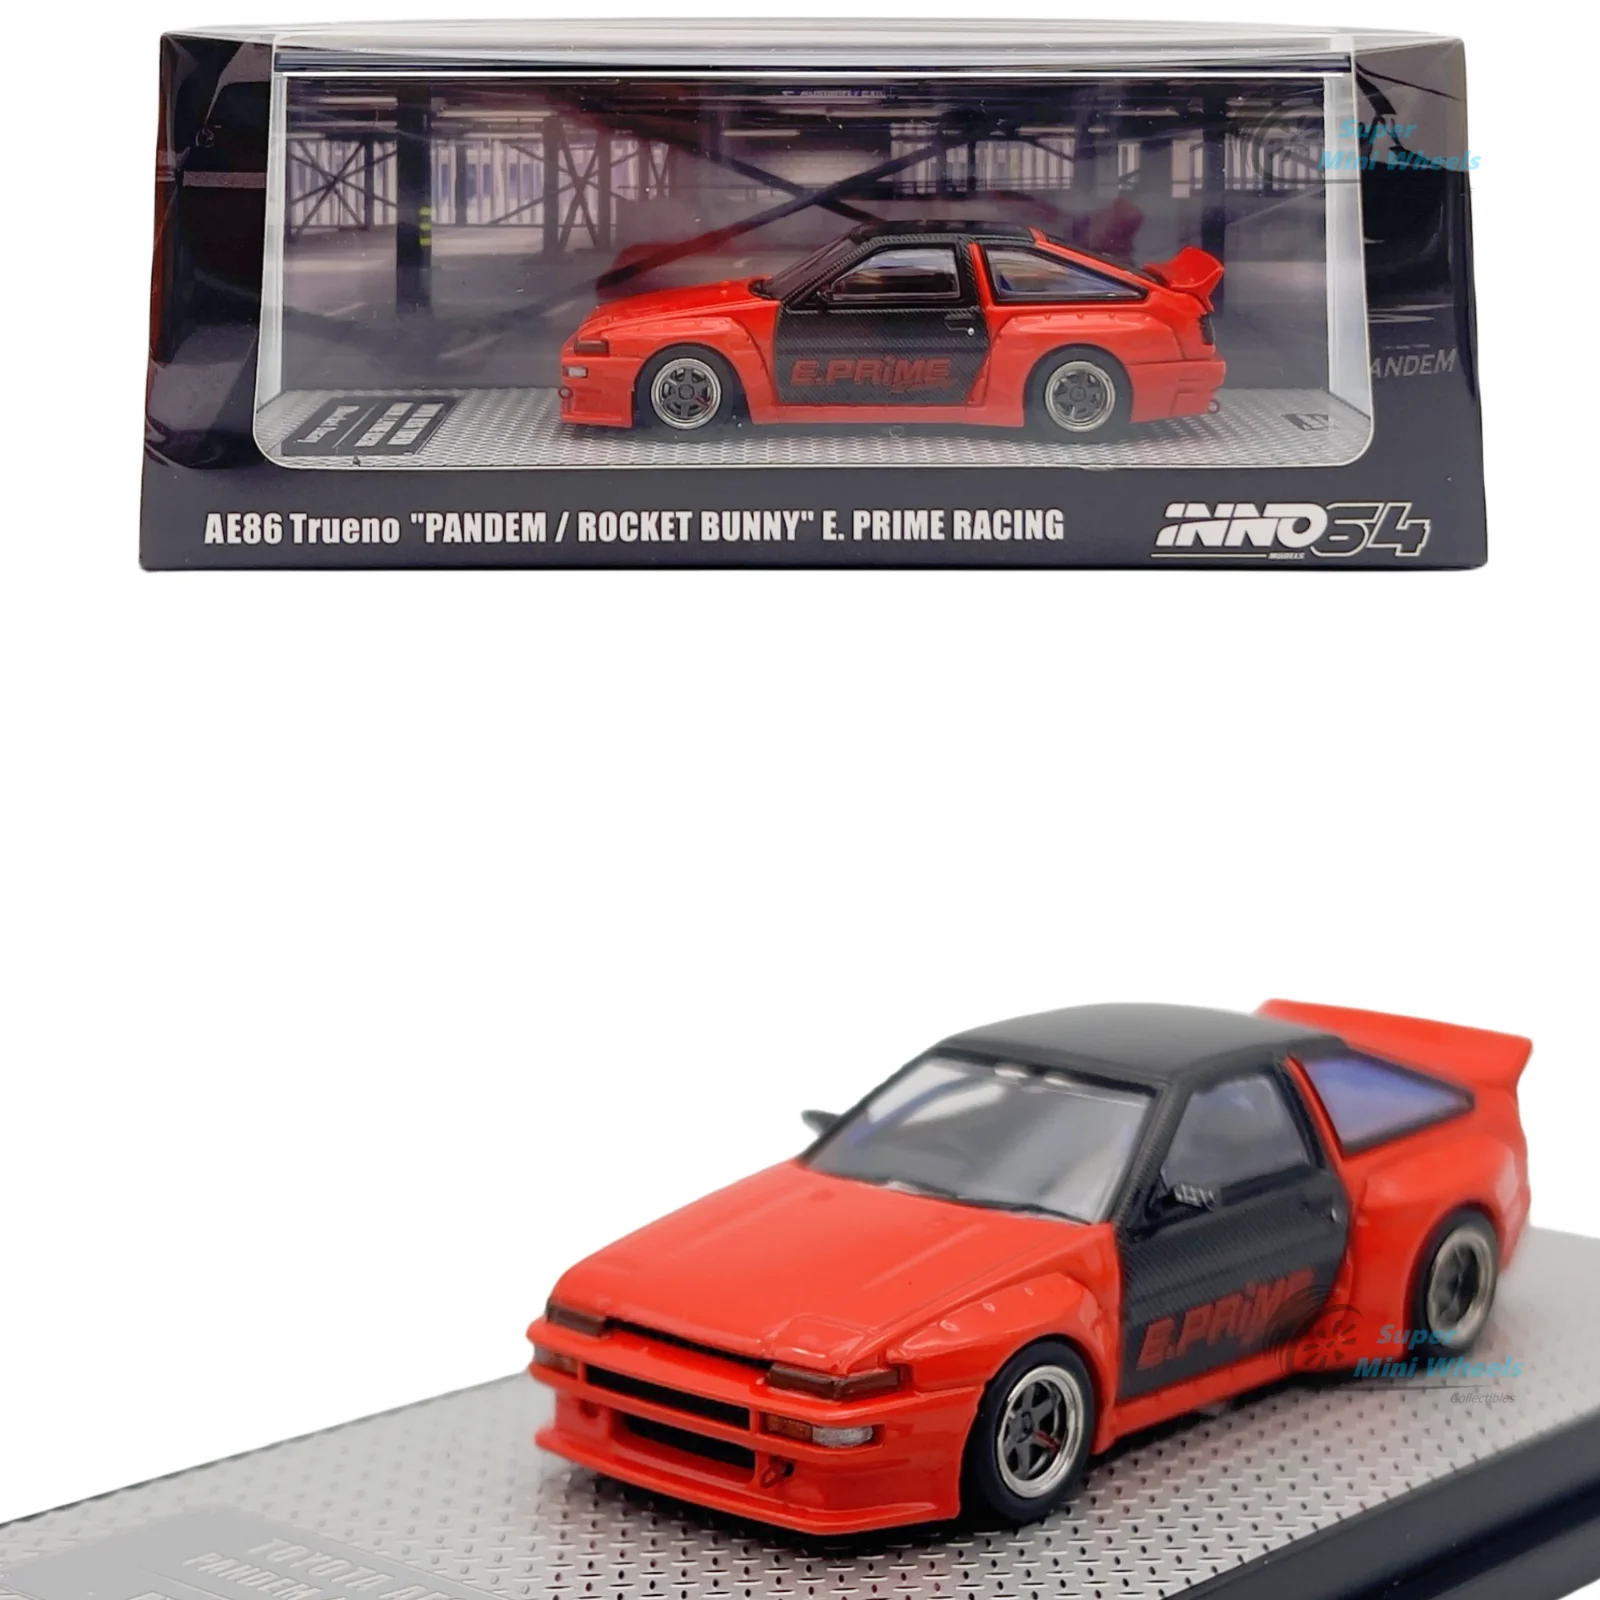 

INNO64 1:64 AE86 Trueno Pandem Rocket Bunny E.prime Racing (Orange) Diecast Model Car Collection Limited Edition Hobby Toys